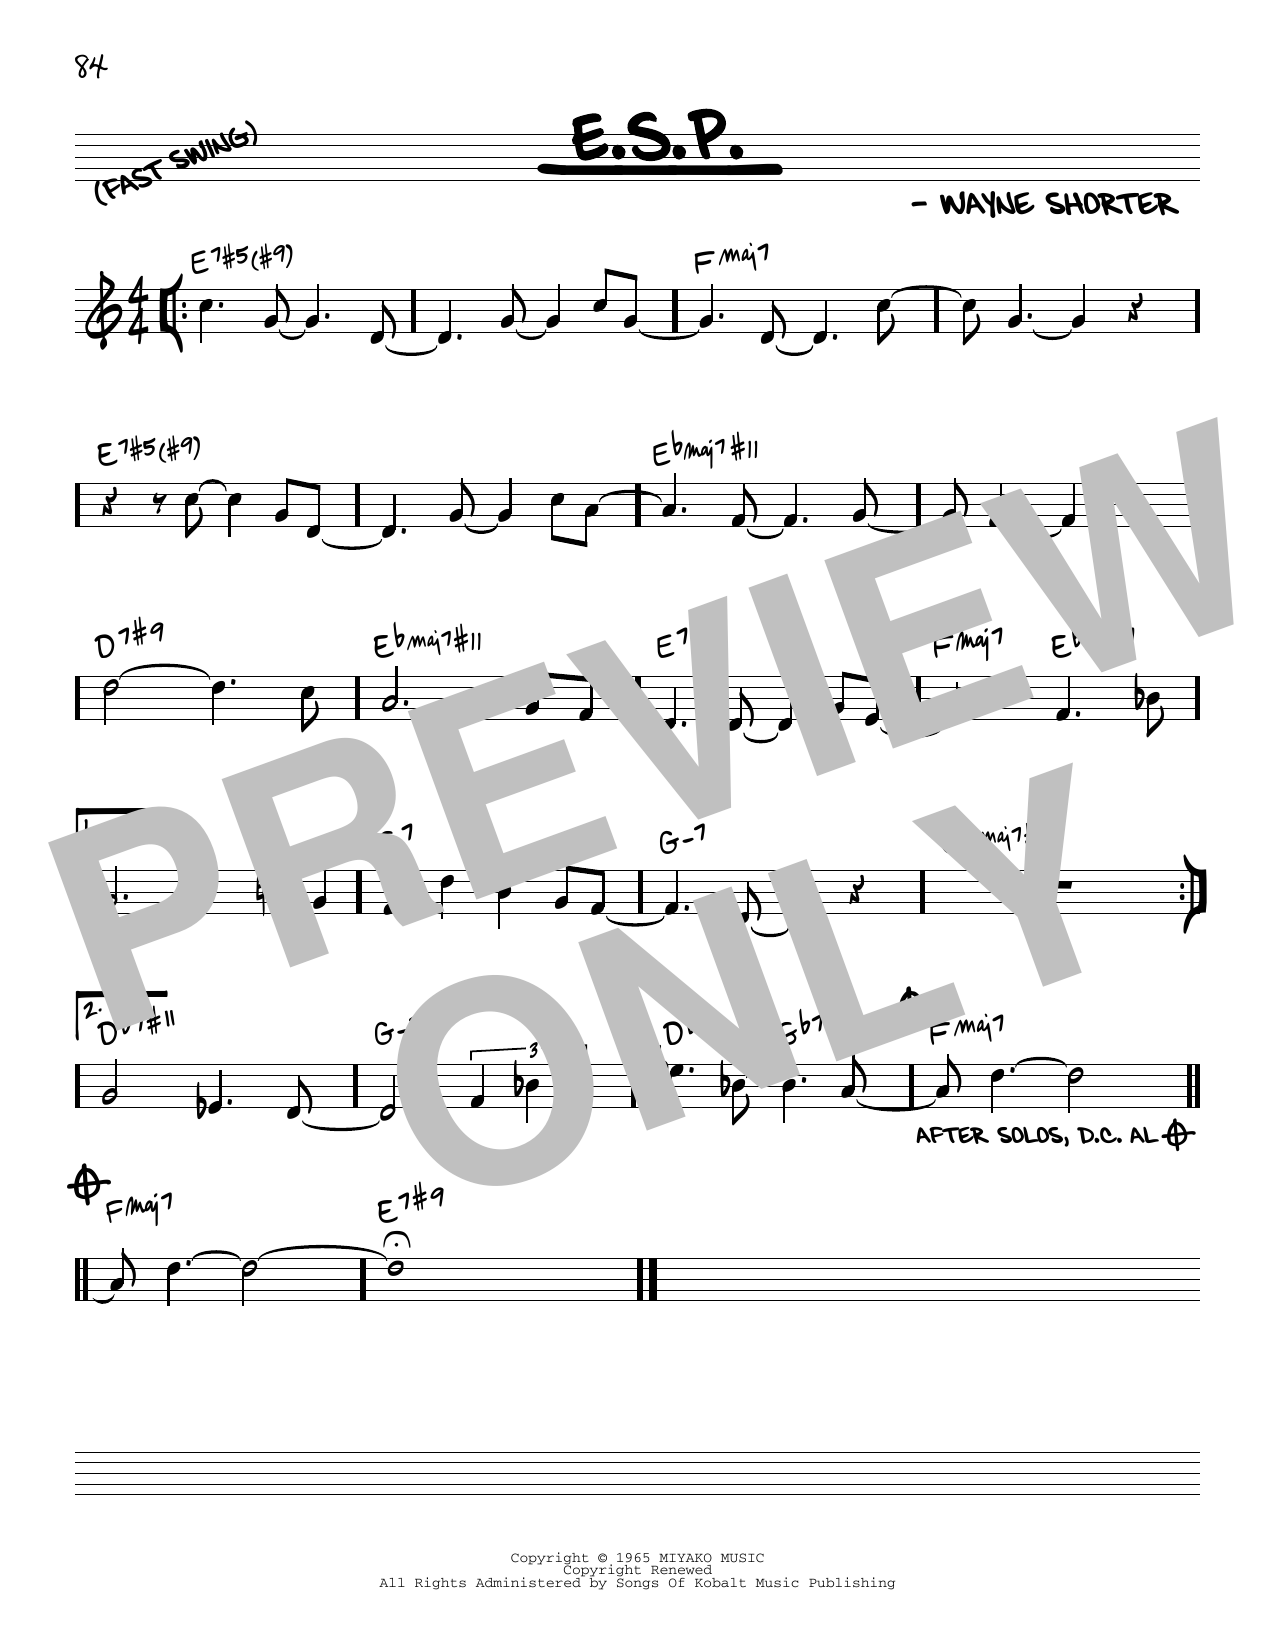 Wayne Shorter E.S.P. Sheet Music Notes & Chords for Tenor Sax Transcription - Download or Print PDF